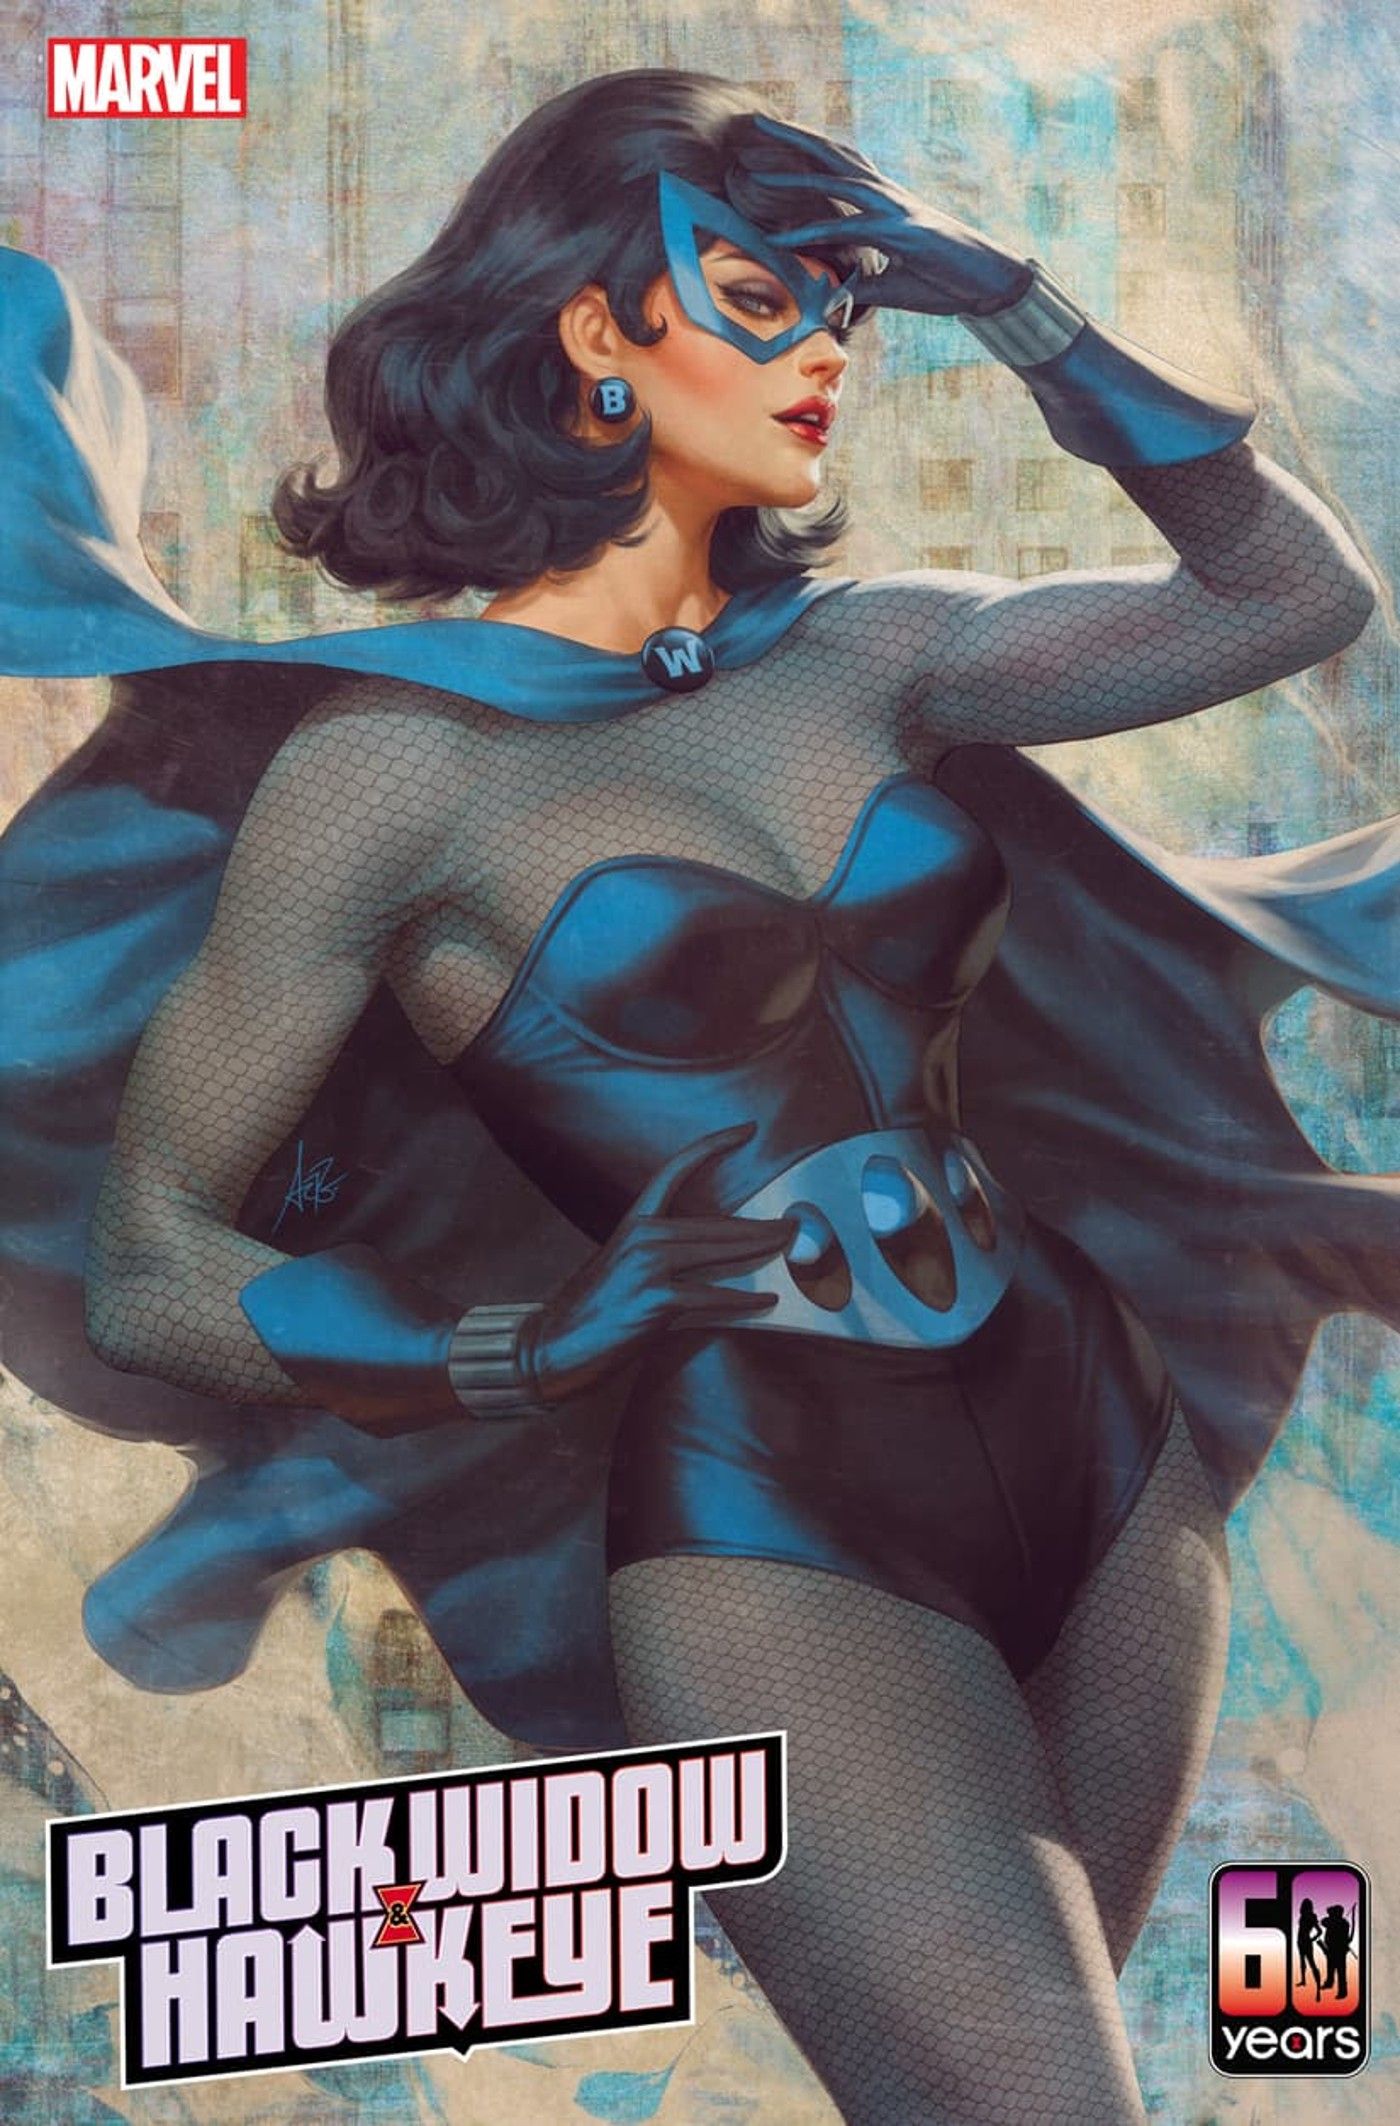 Black Widow’s Original ‘Femme Fatale’ Costume Returns in Epic New Marvel Cover Art